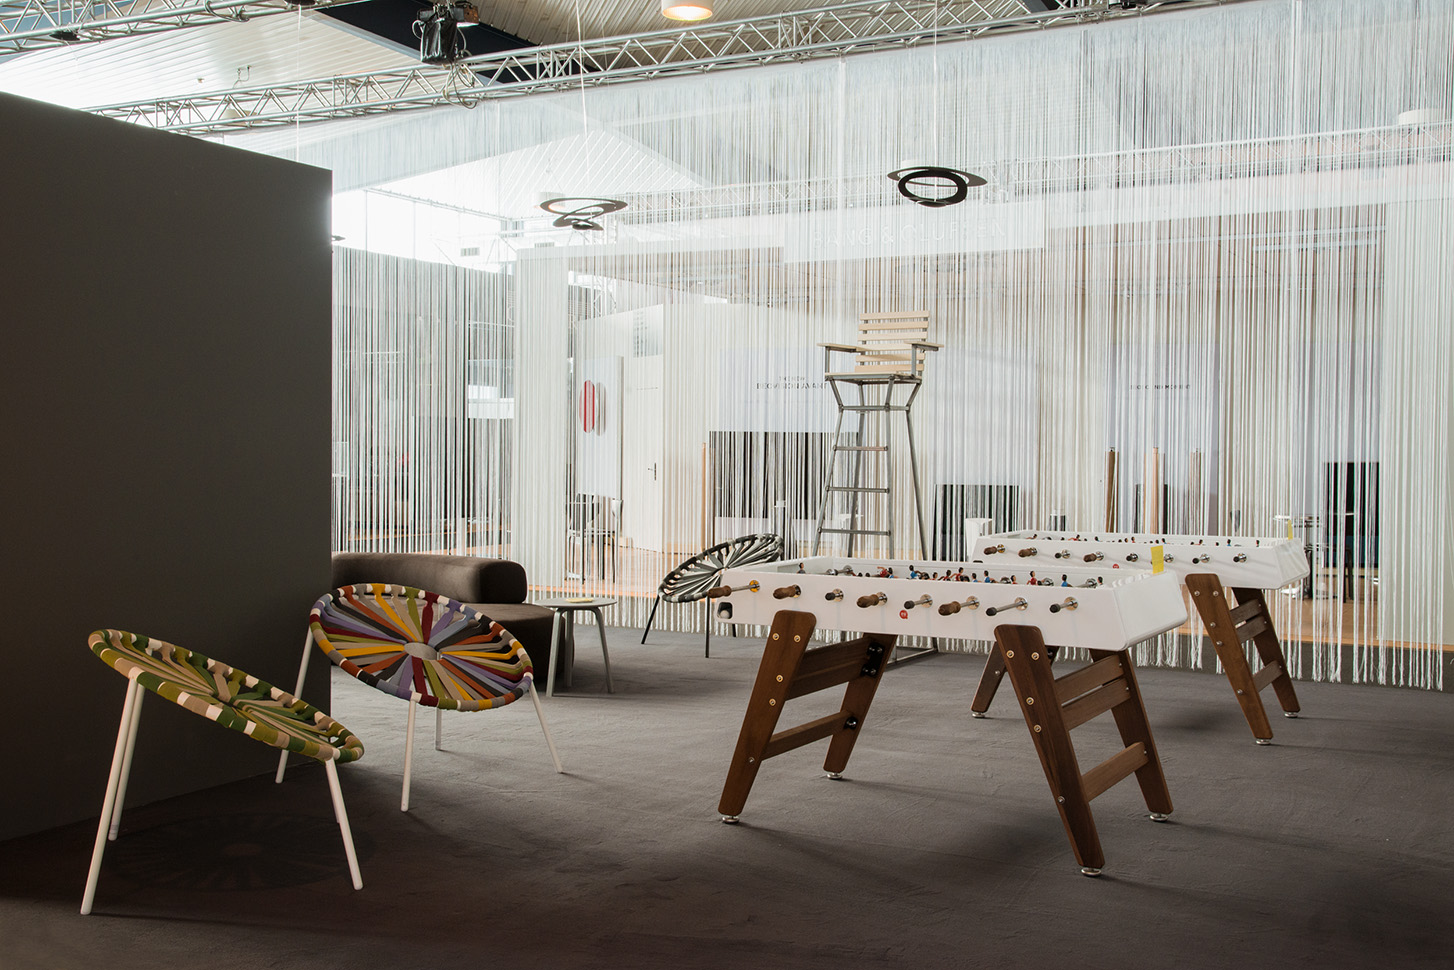  Habitat - Jardin 2015, Beaulieu Lausanne  Scenography Design Studio Renens 